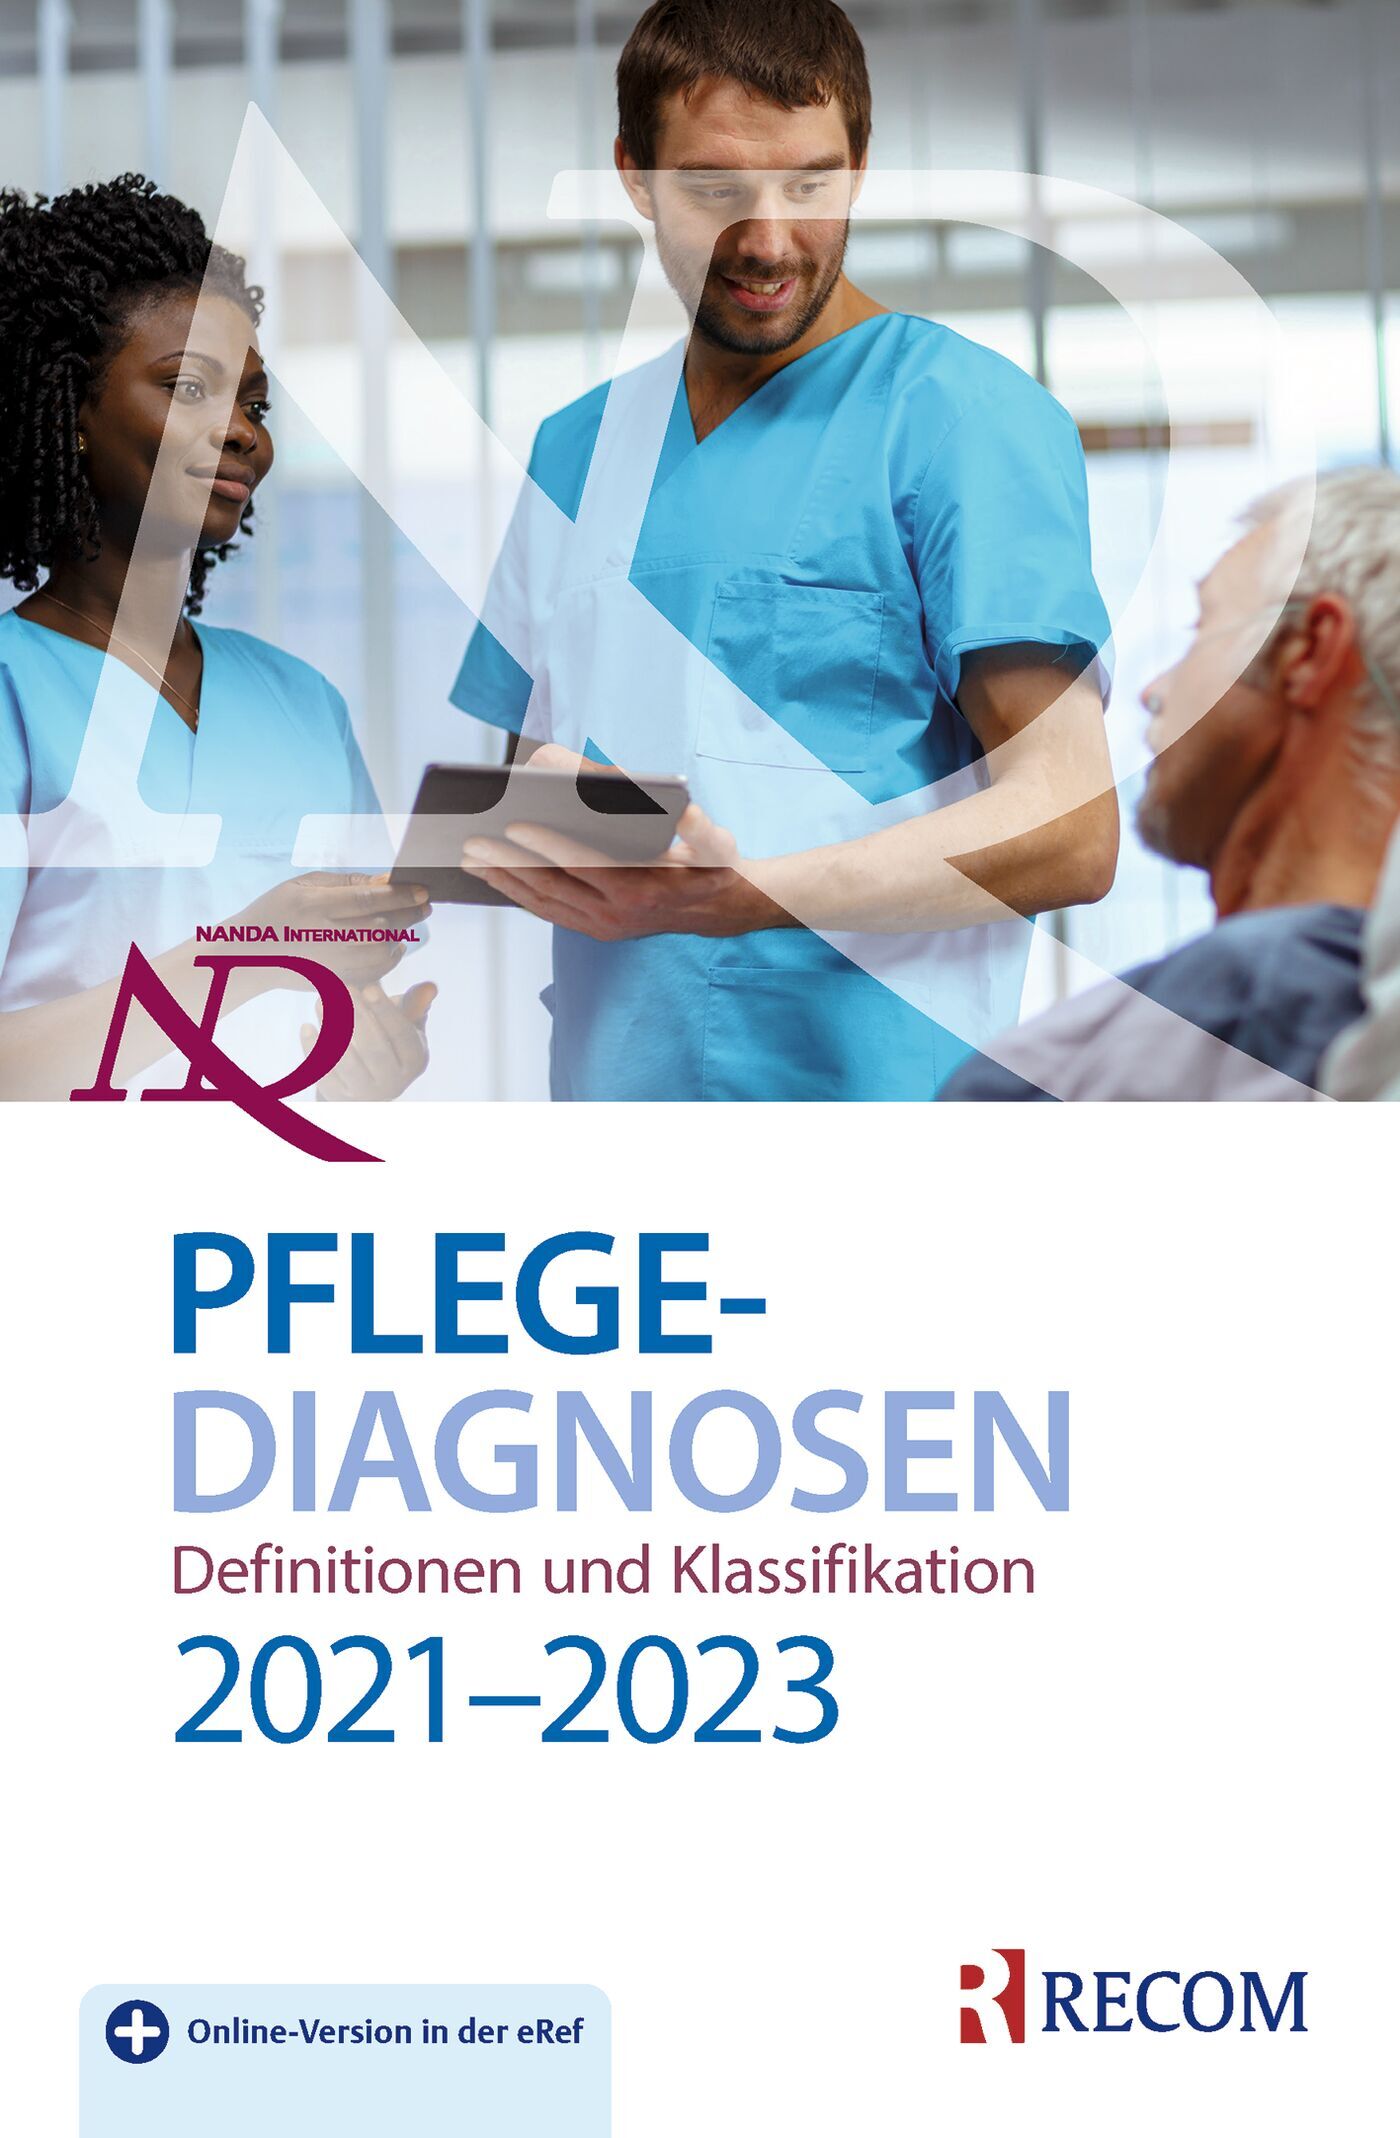 NANDA-I-Pflegediagnosen: Definitionen und Klassifikation 2021-2023, 9783897521605